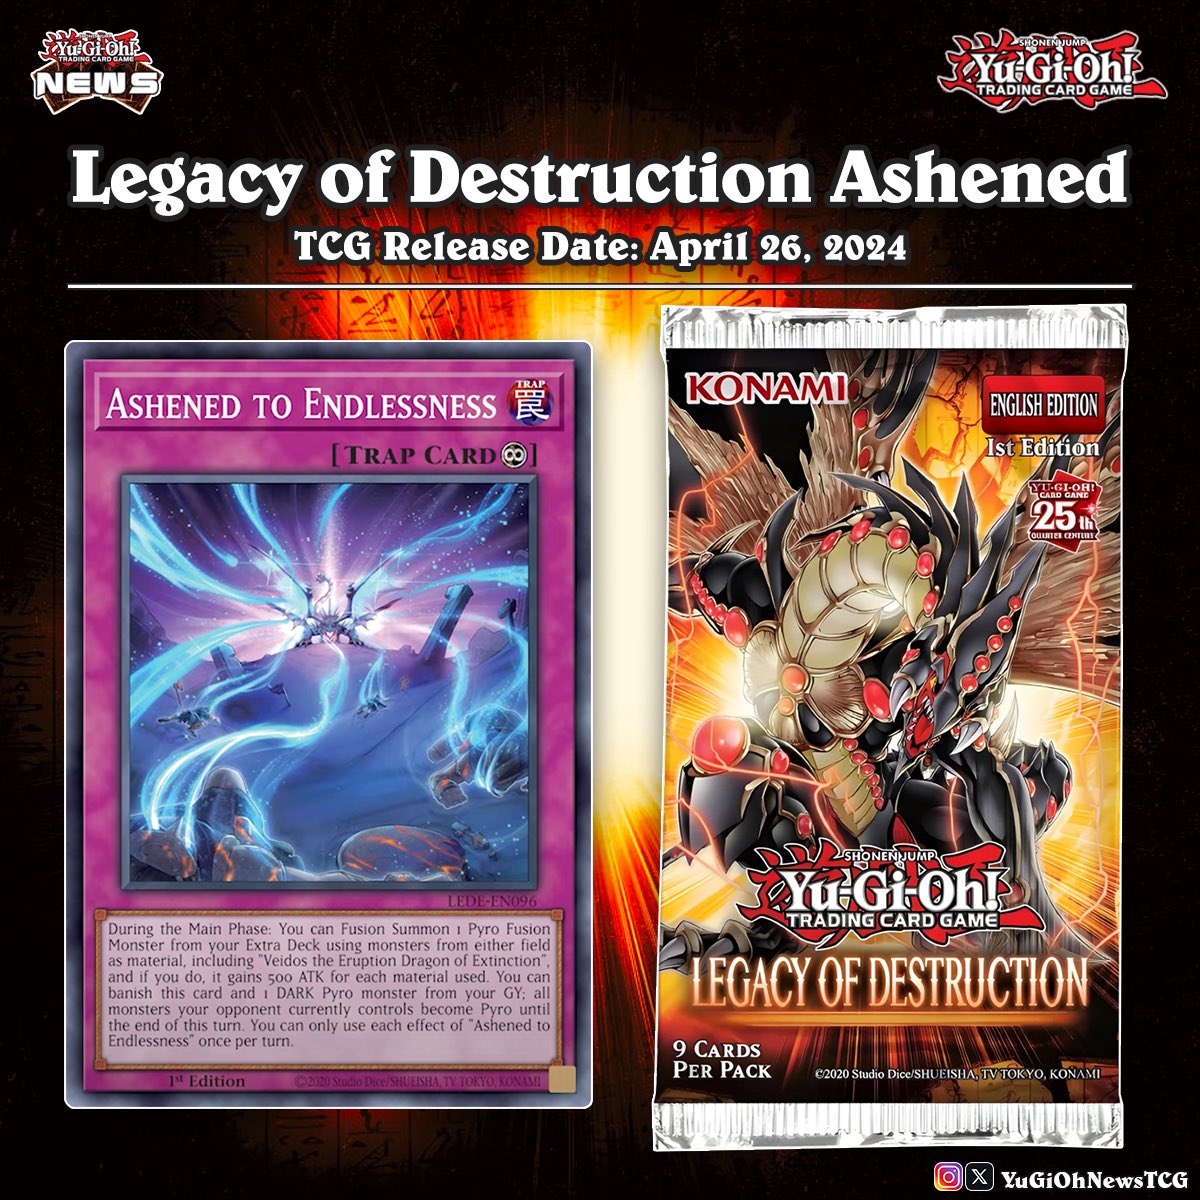 ❰𝗟𝗲𝗴𝗮𝗰𝘆 𝗼𝗳 𝗗𝗲𝘀𝘁𝗿𝘂𝗰𝘁𝗶𝗼𝗻❱ “Legacy of Destruction” Ashened - More Gameplay Mechanics❗️✨ #遊戯王 #YuGiOh #유희왕